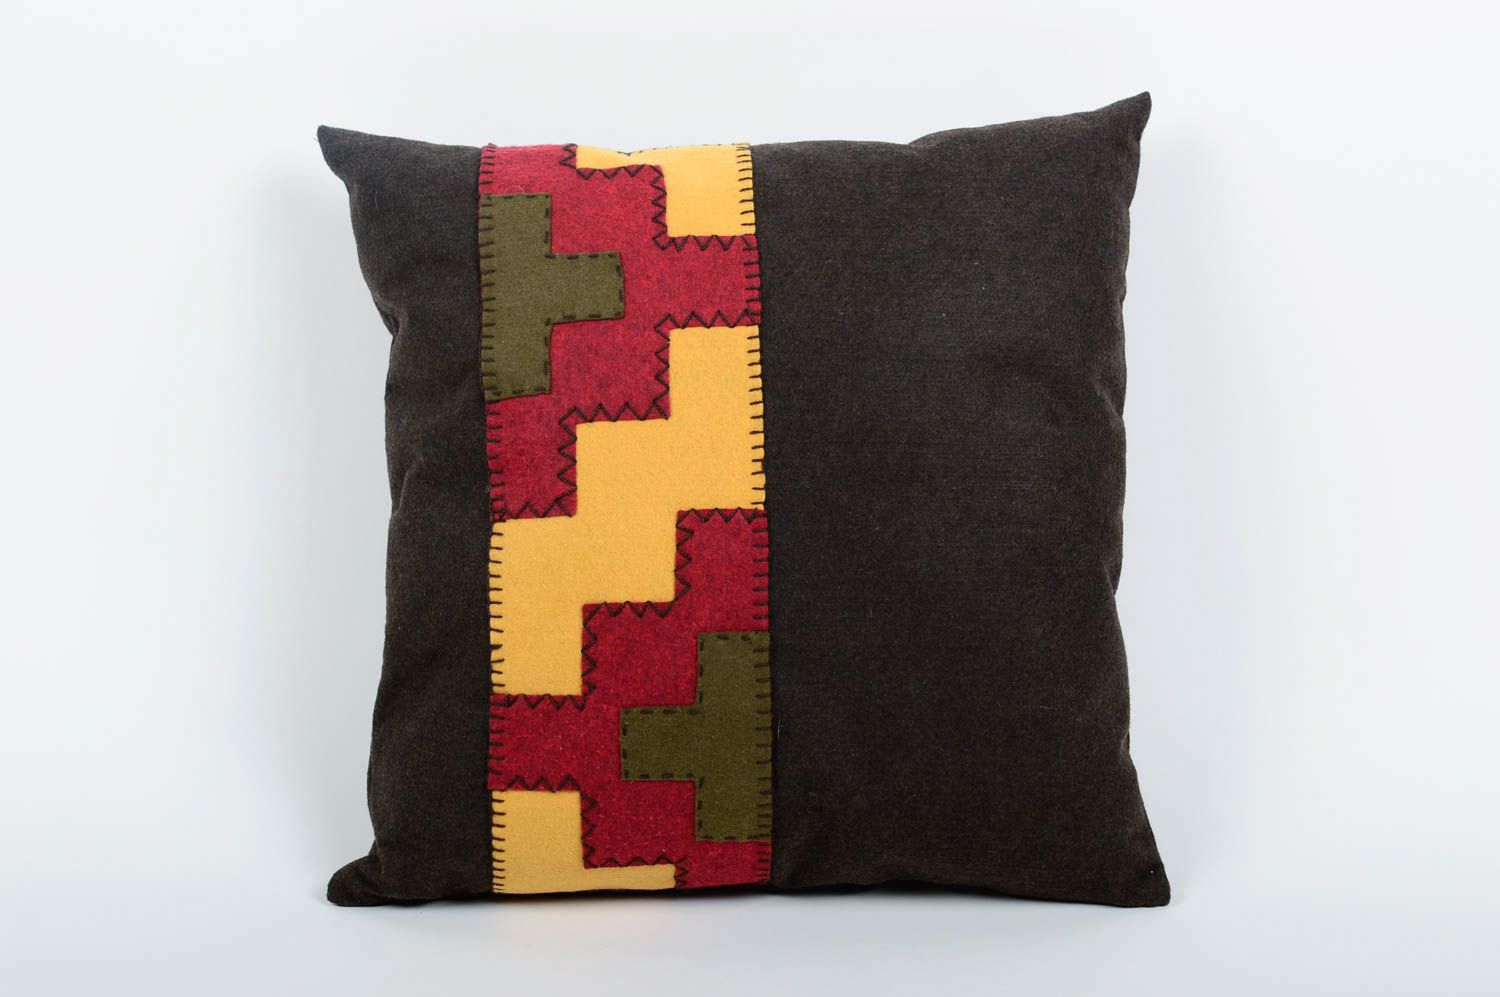 Unusual handmade cushion decorative throw pillow home goods gift ideas photo 1